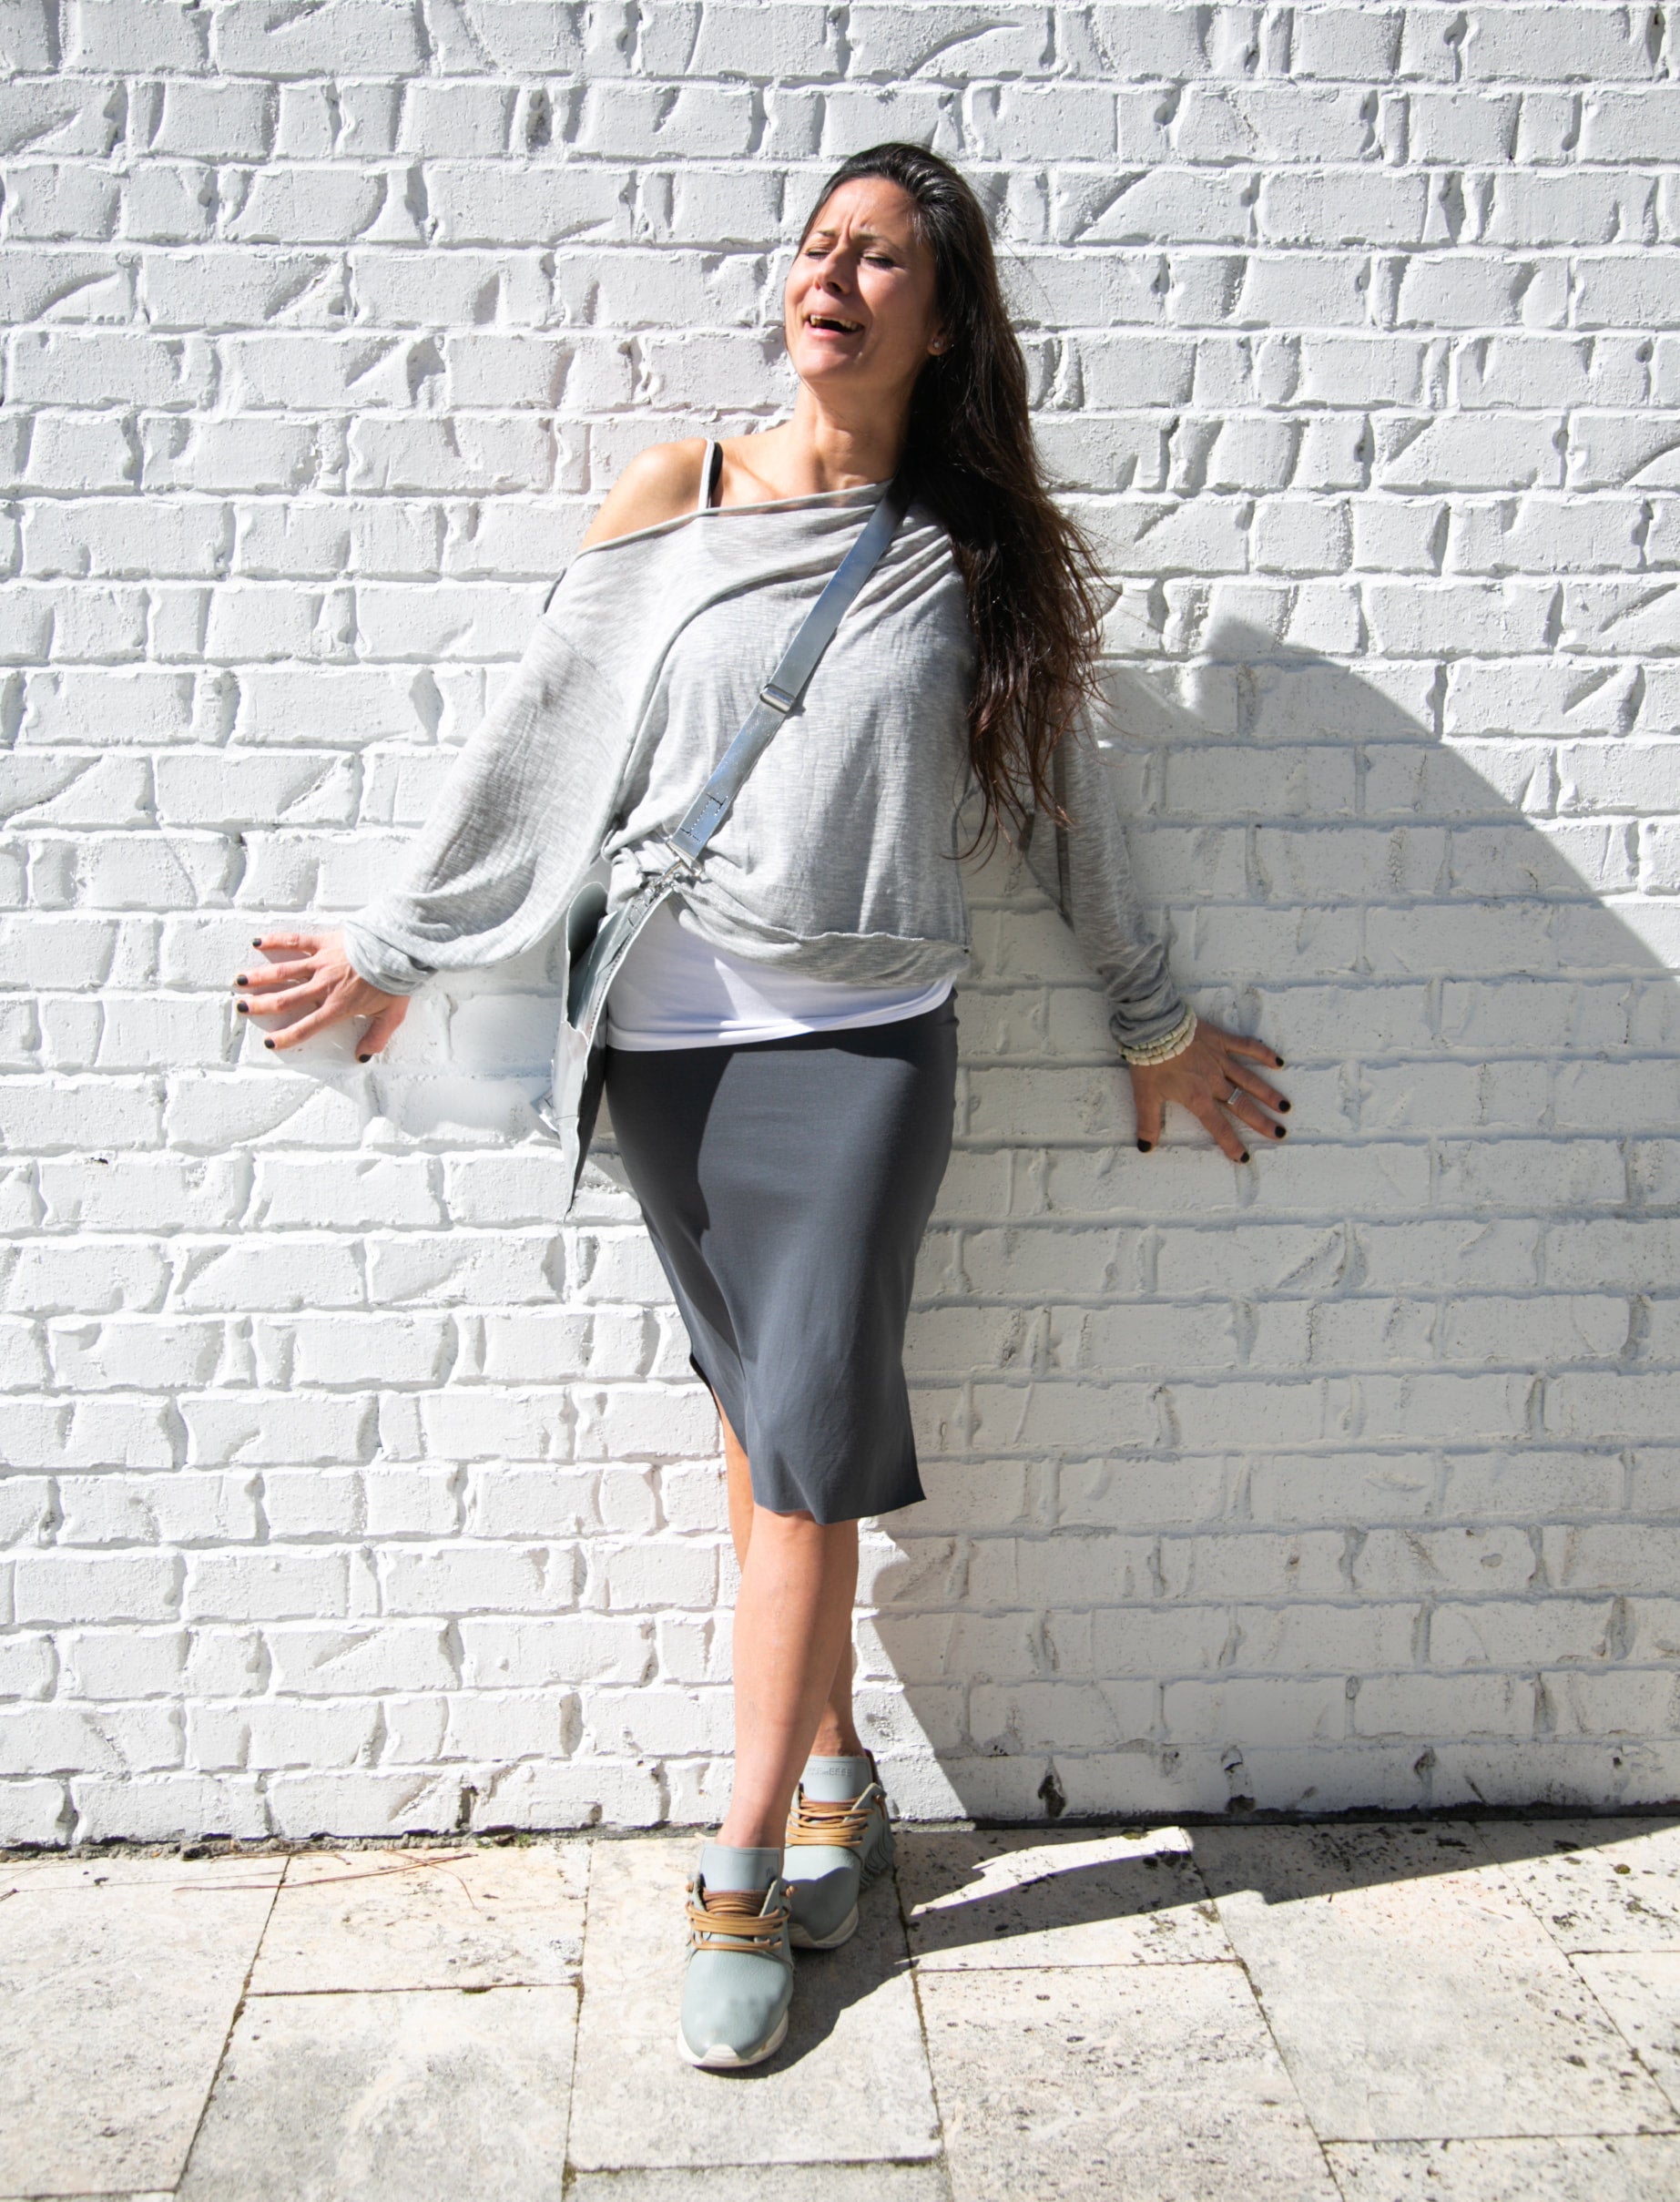 Hinder Geheim Jasje pencil skirt in grey jersey | Nicole Paloma Original Handsewn Designs